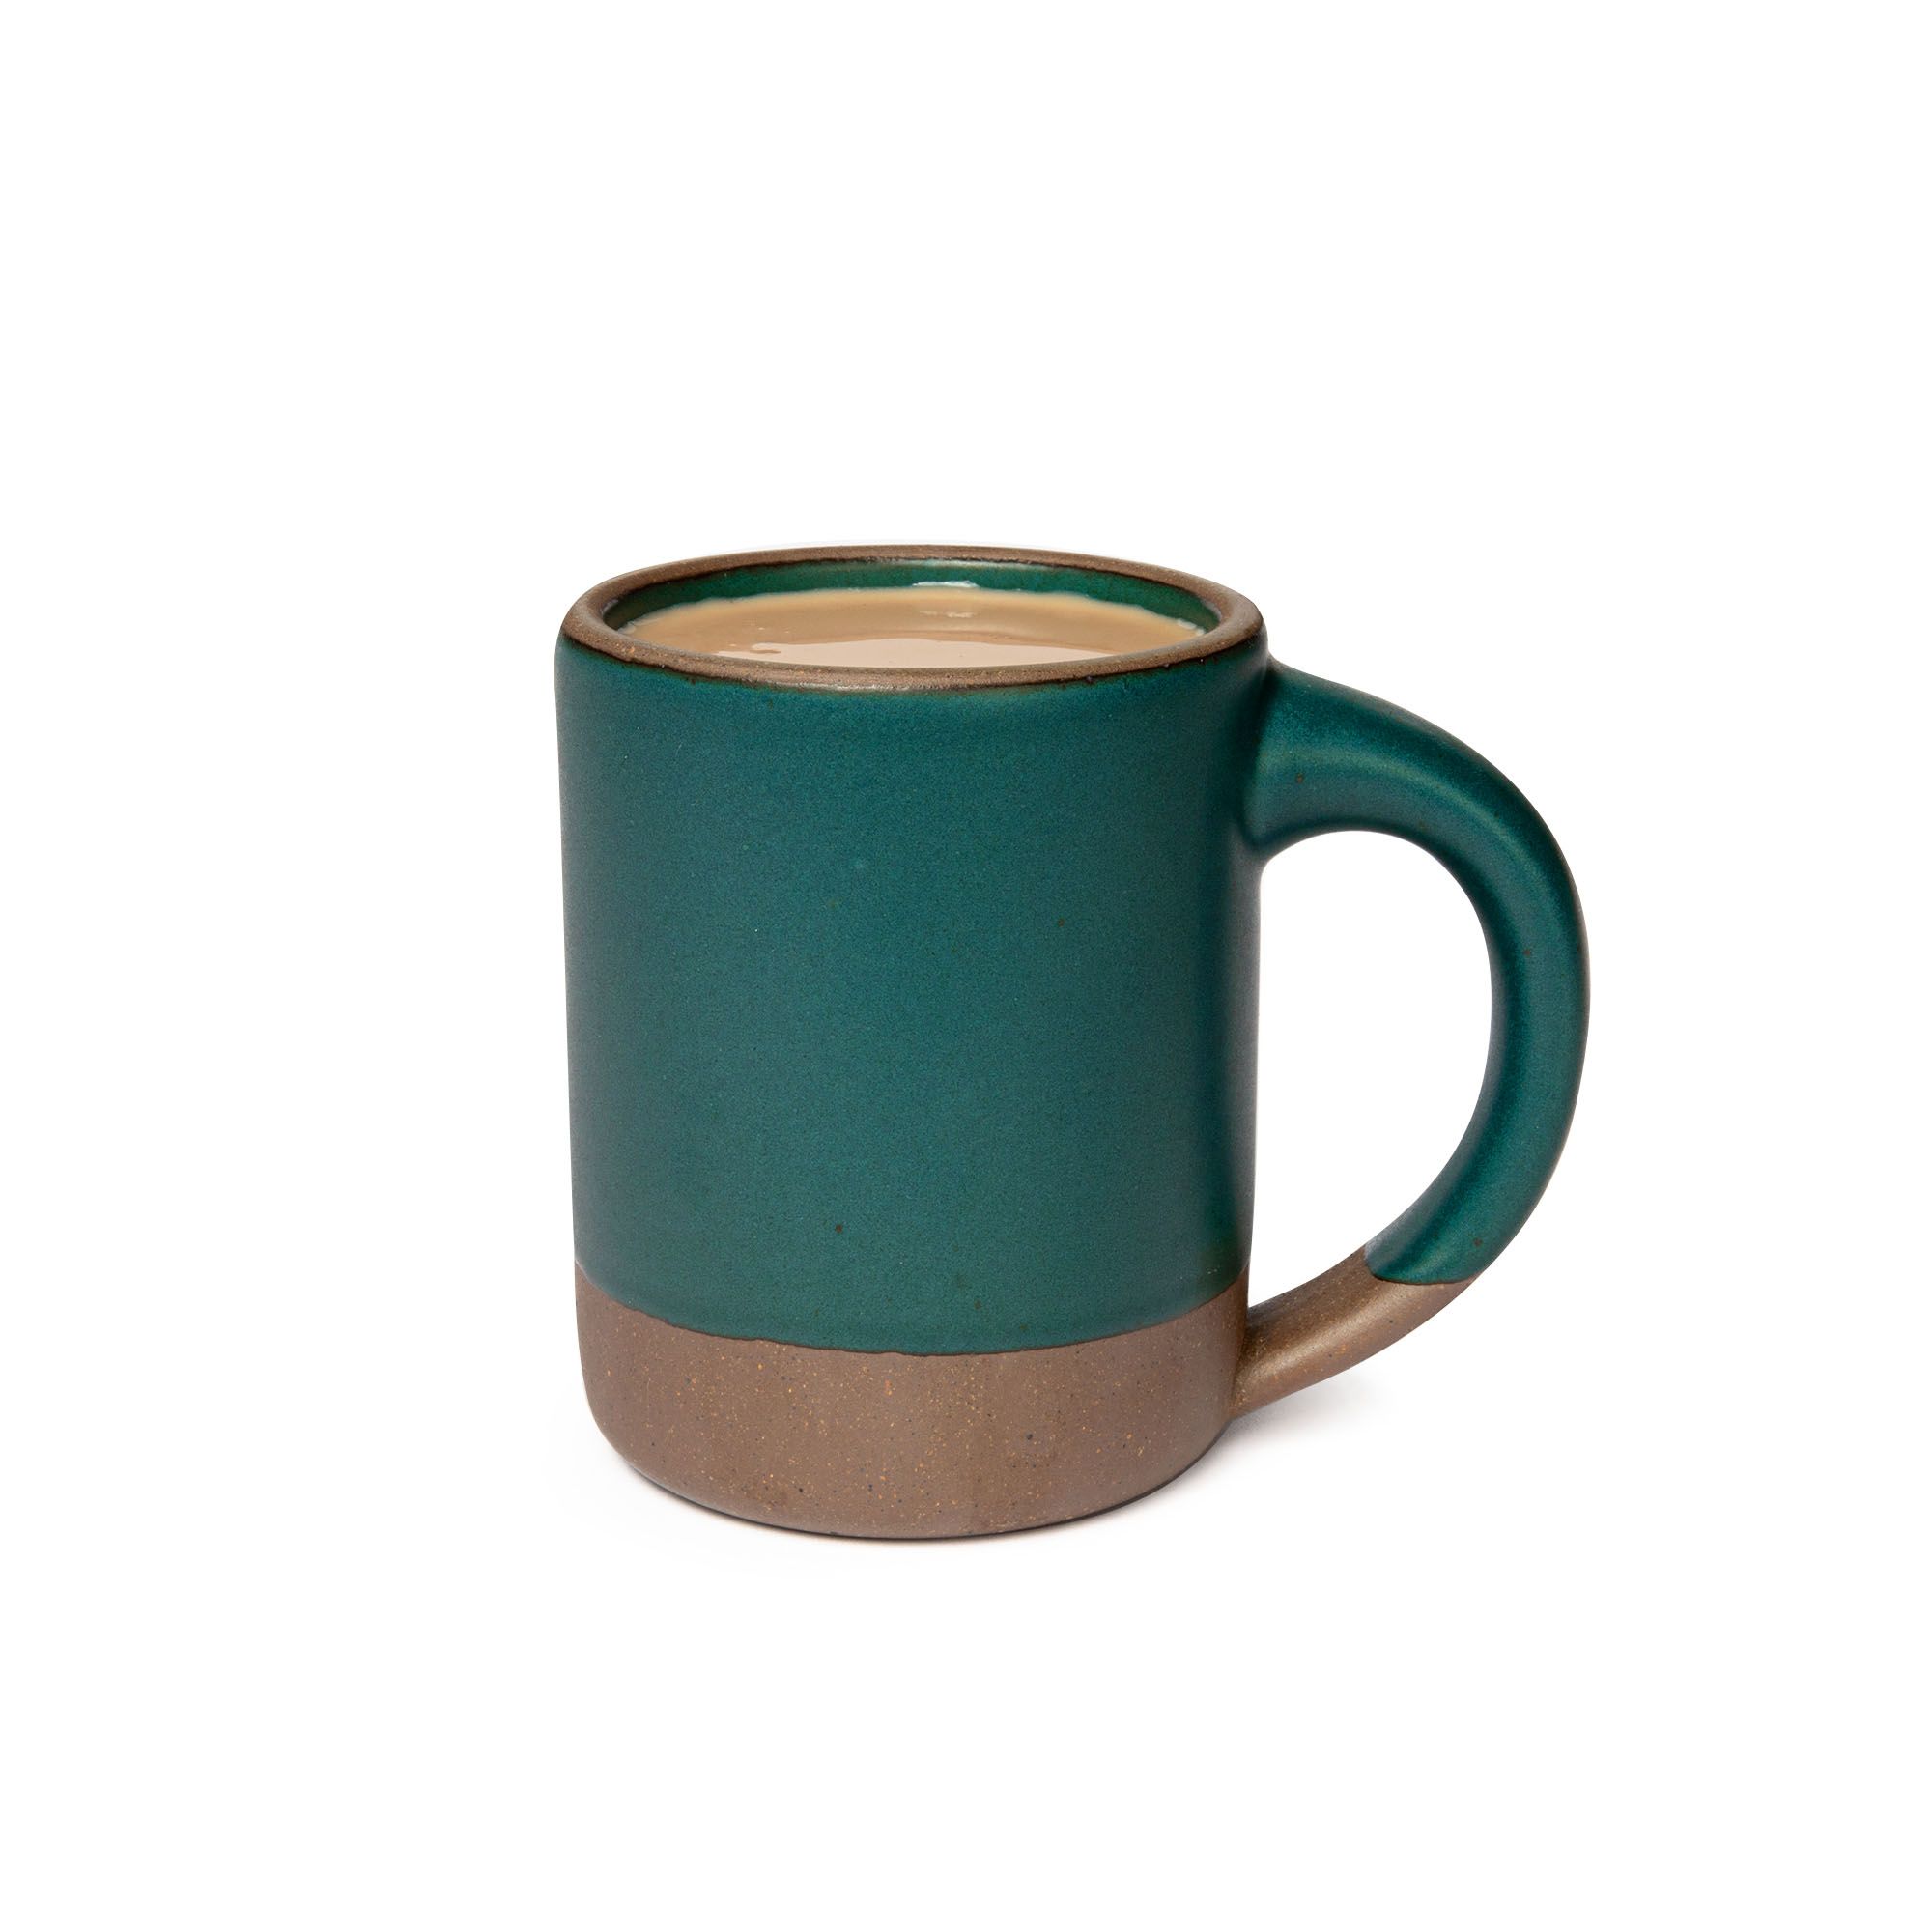 Large Pottery Coffee Mug 24 oz - Oversized Tea Cup - Ceramic Soup